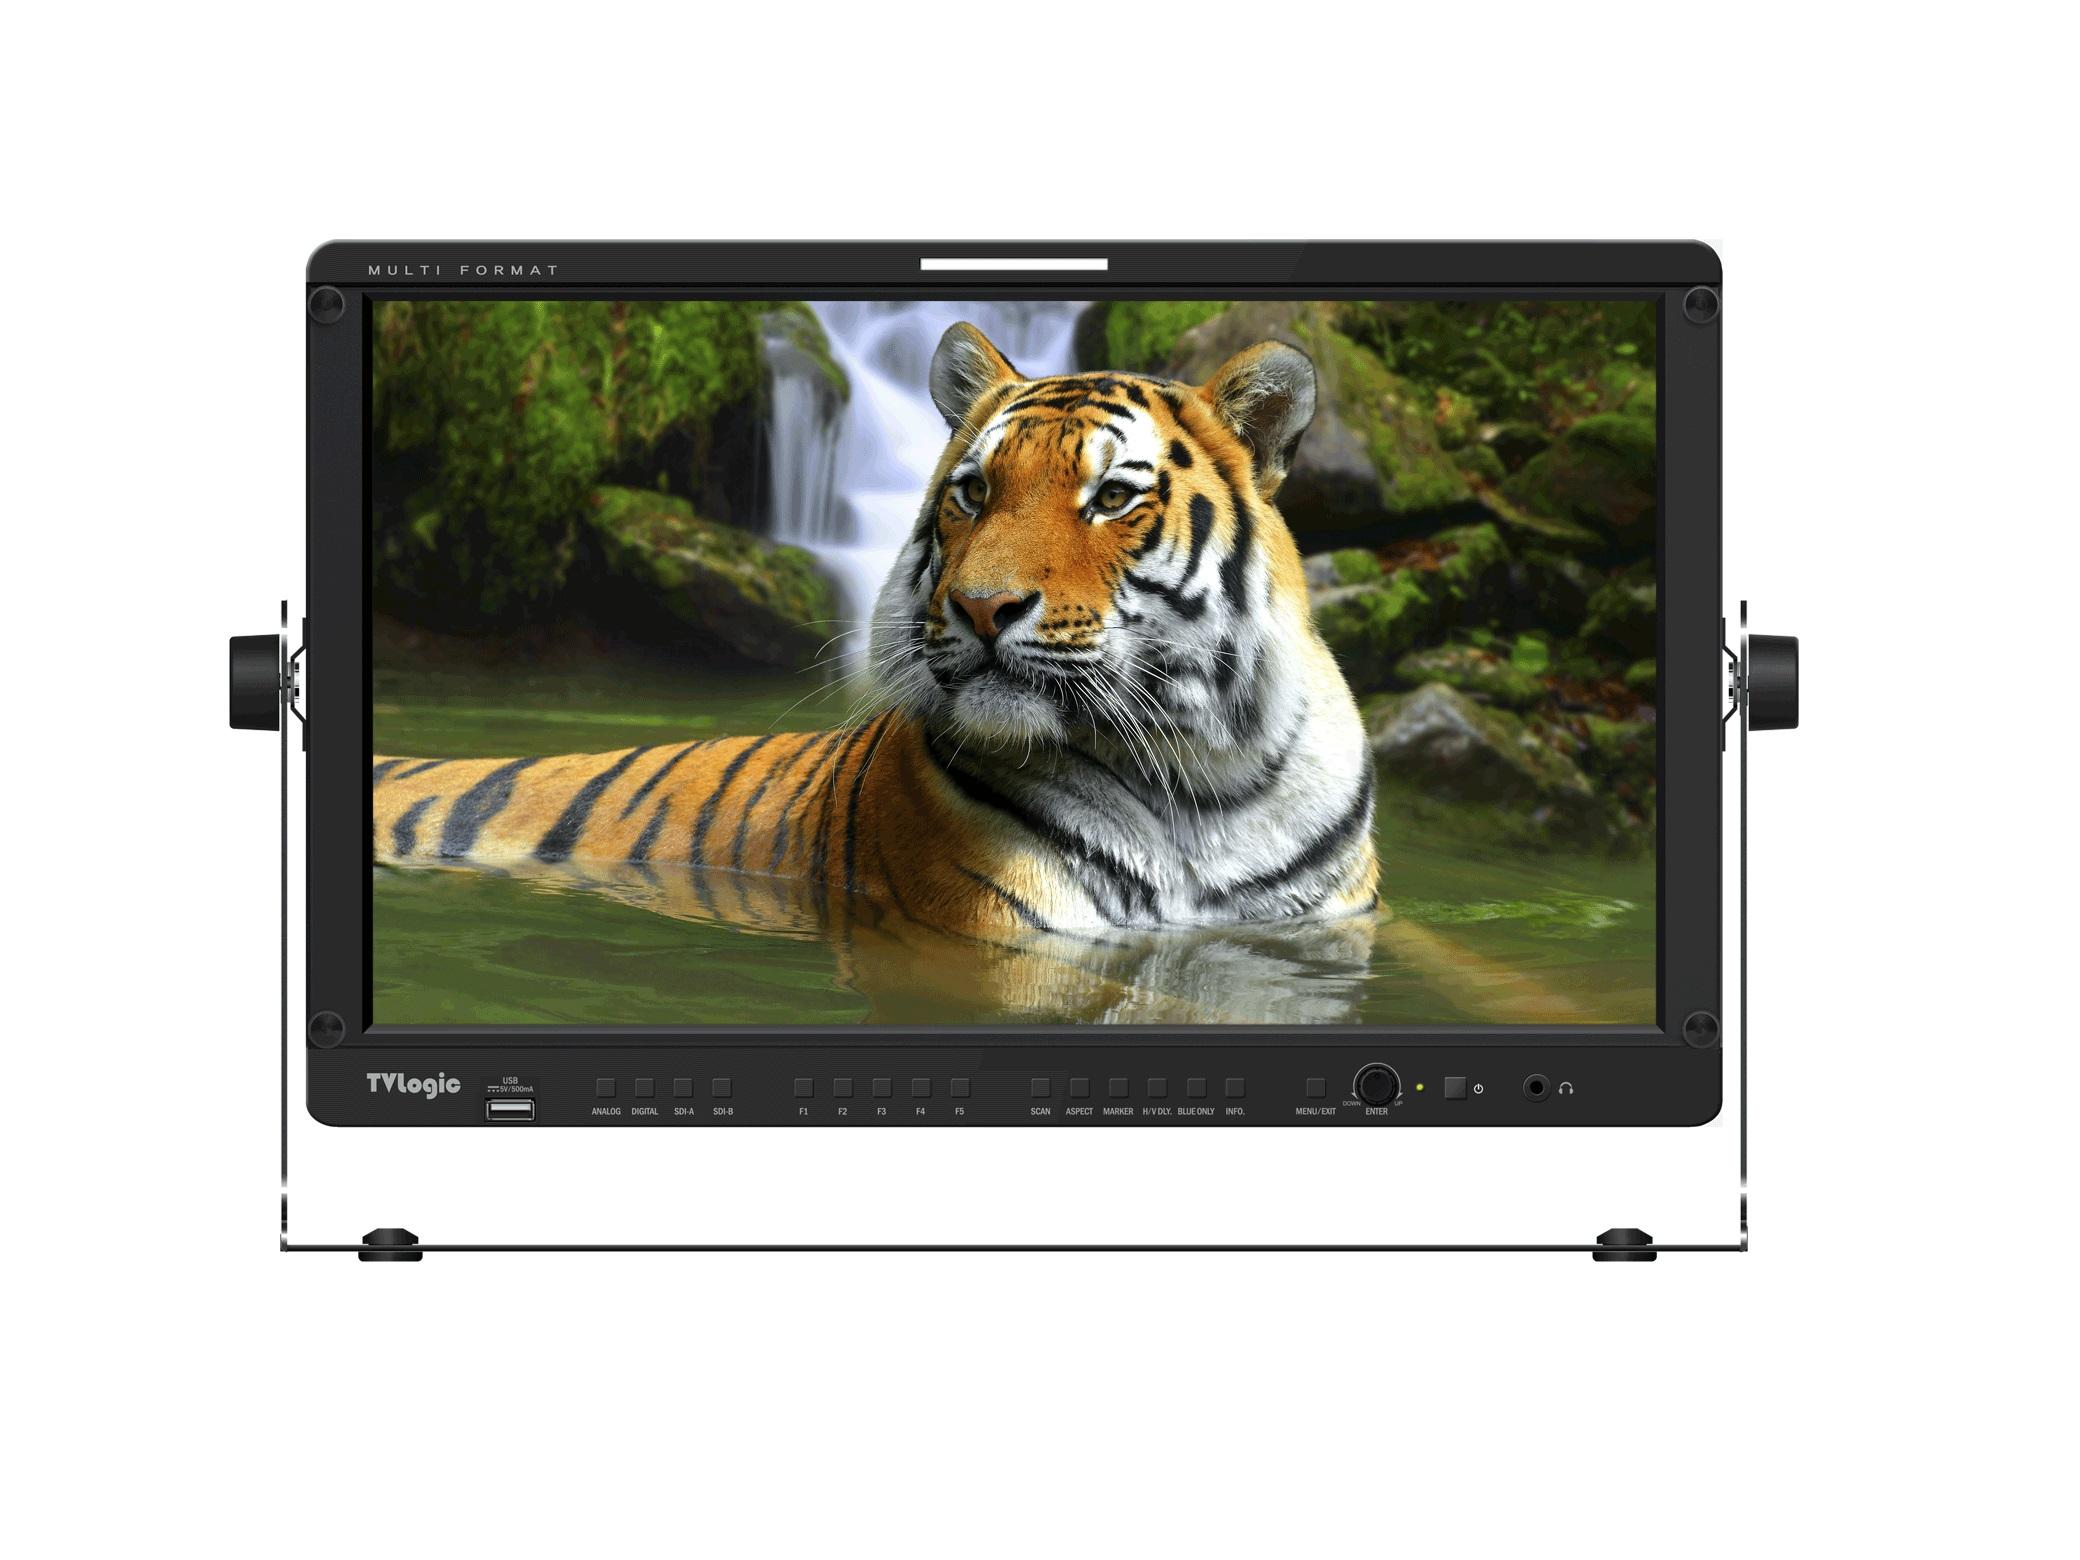 TVlogic LVM-170A 17 inch Full HD 1920x1080 multi-purpose 3G-SDI/DVI/HDMI LCD Monitor